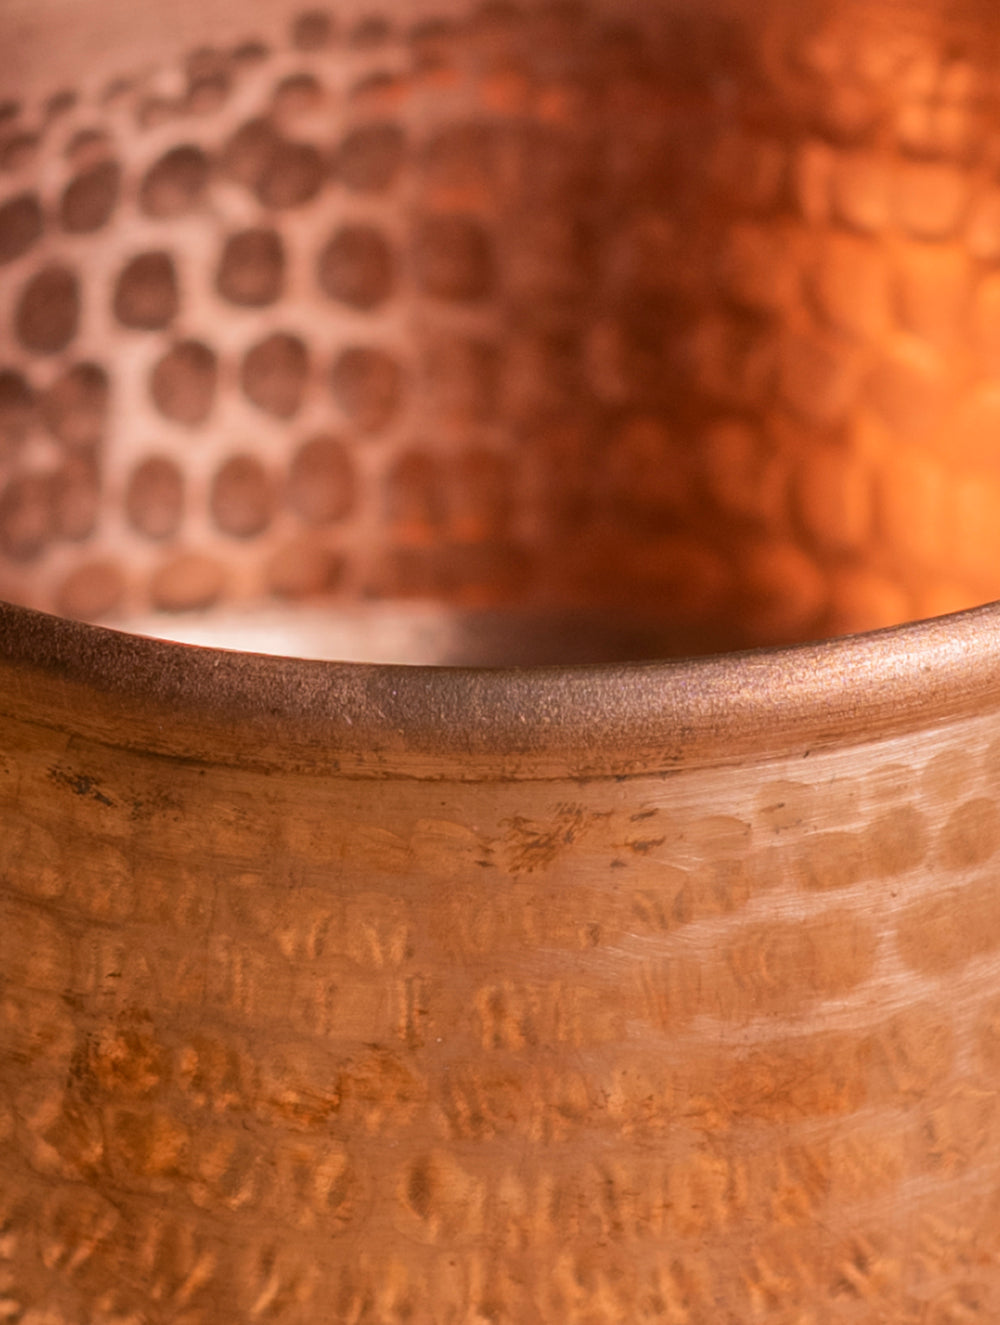 Load image into Gallery viewer, Tambat Handbeaten Copper Vati Bowls (Set of 2)